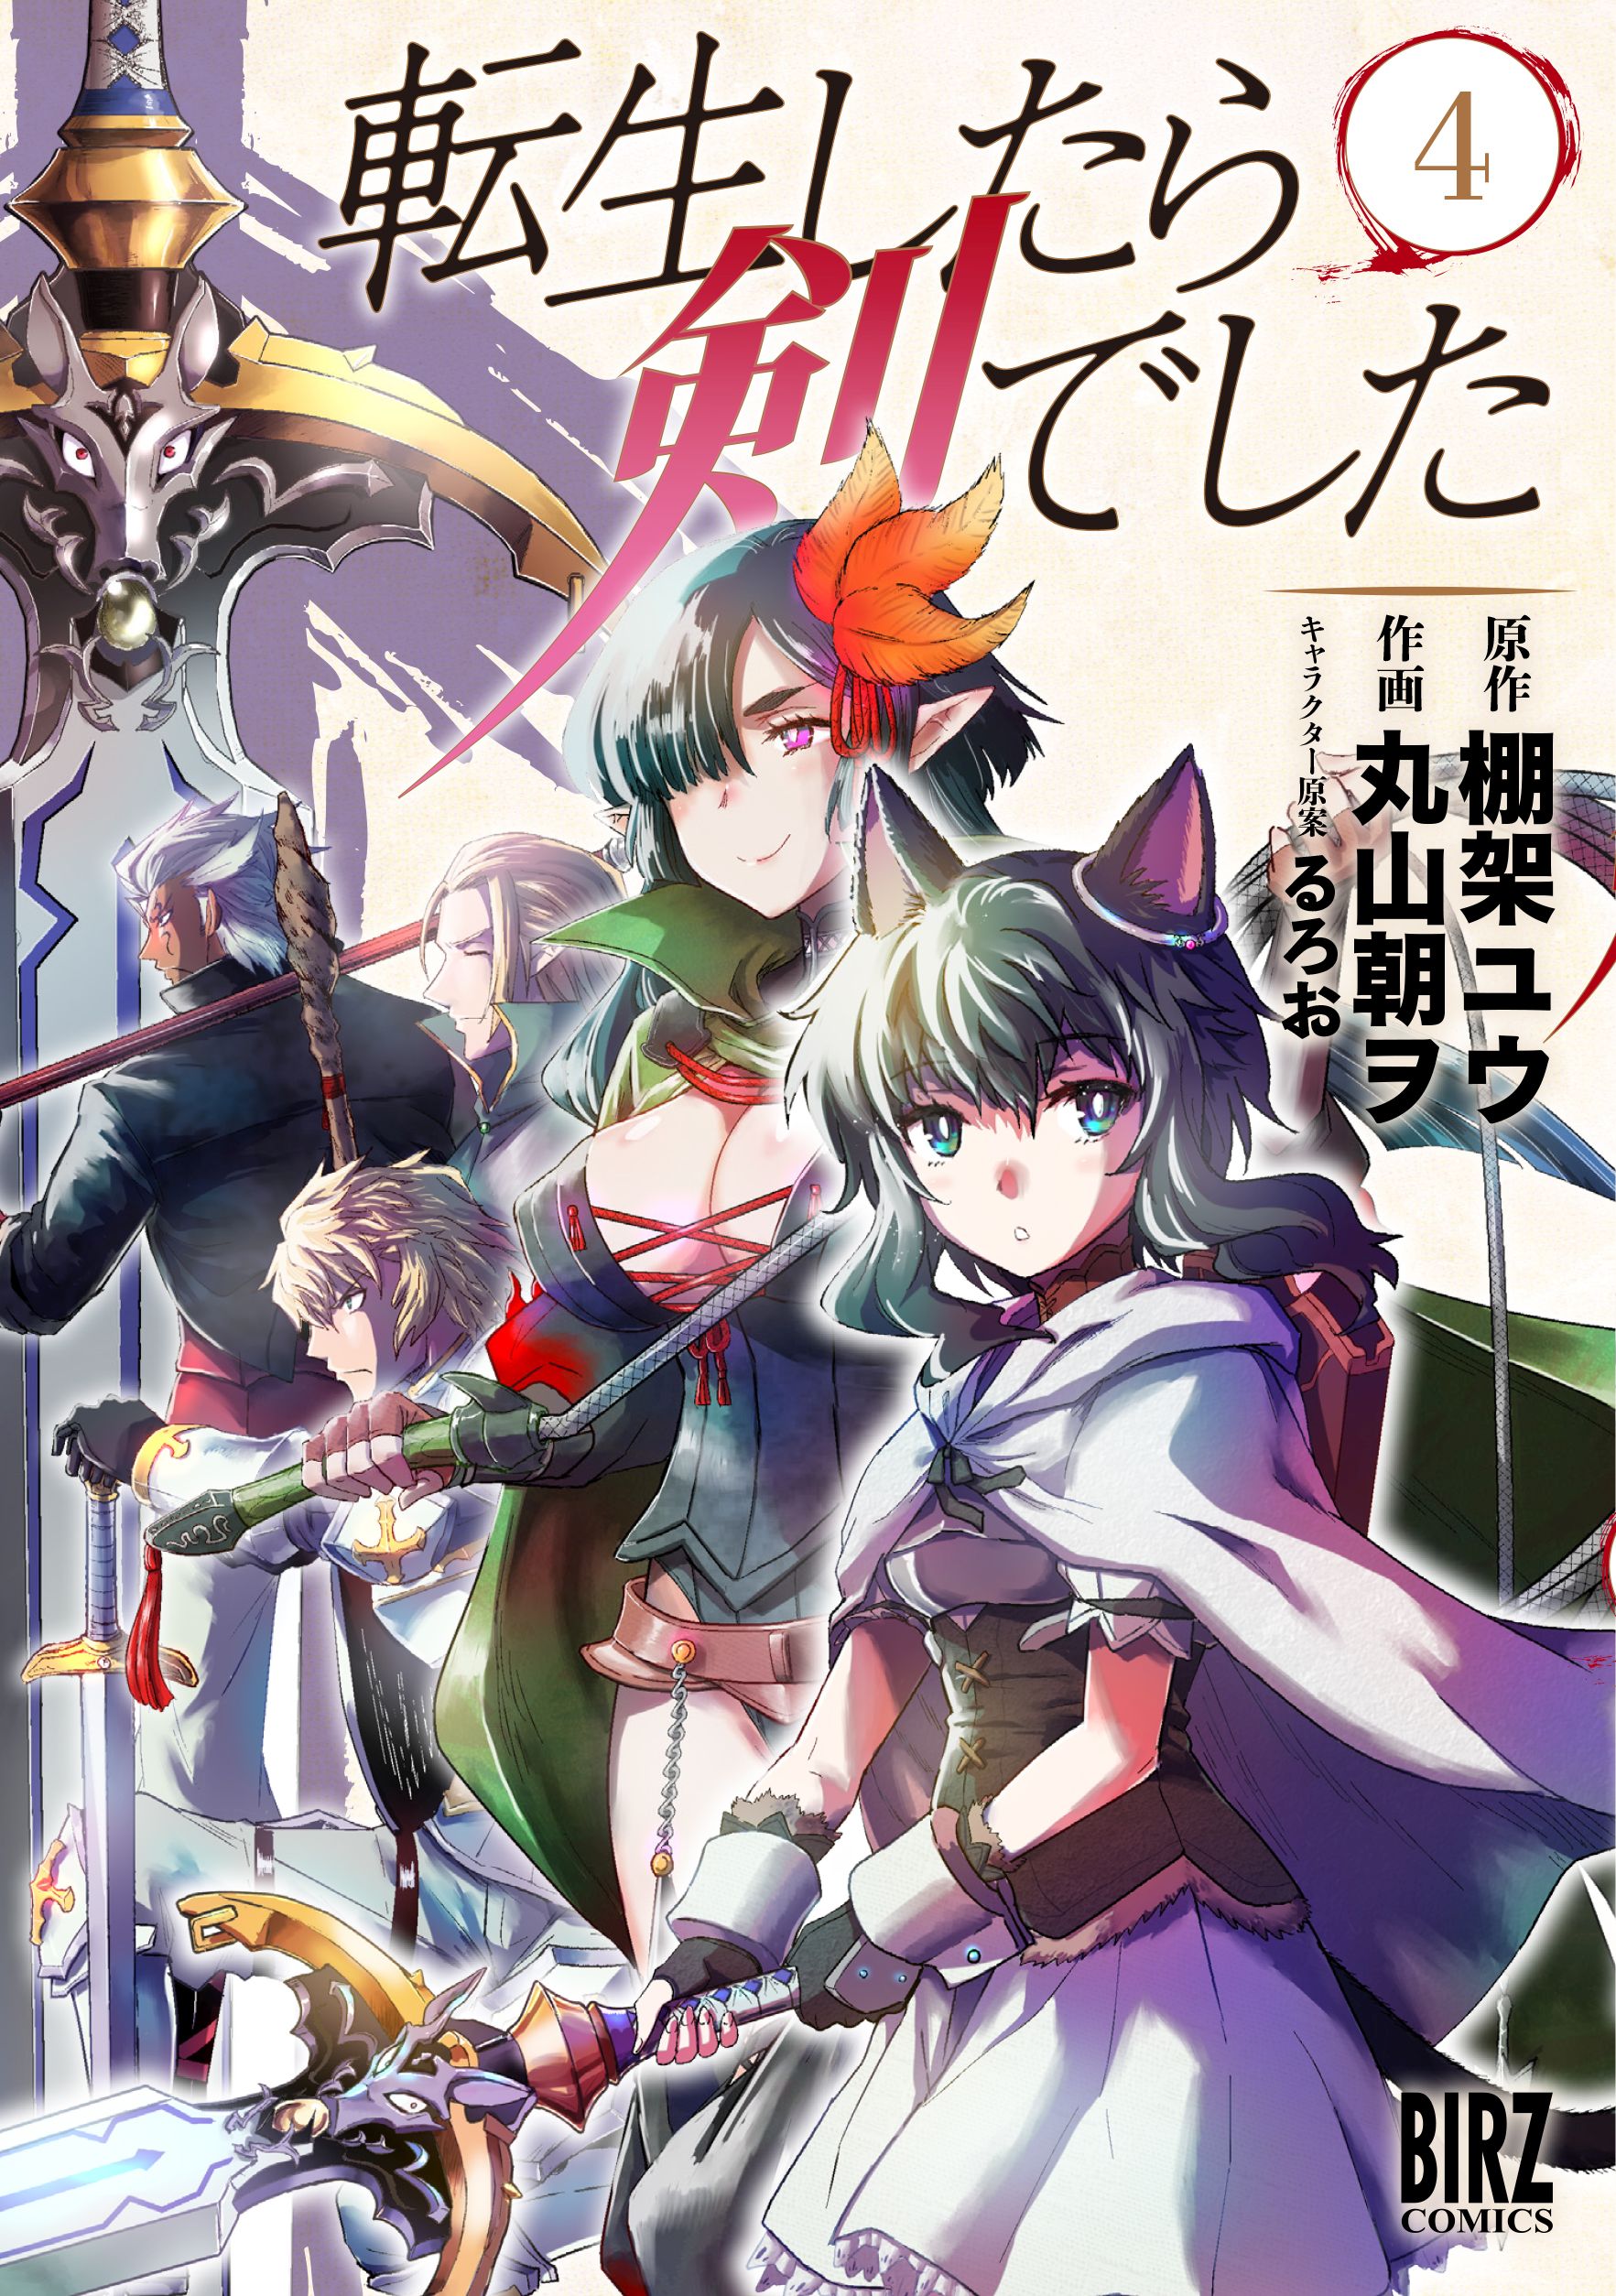 Read Tensei Shitara Ken deshita Manga English [New Chapters] Online Free -  MangaClash